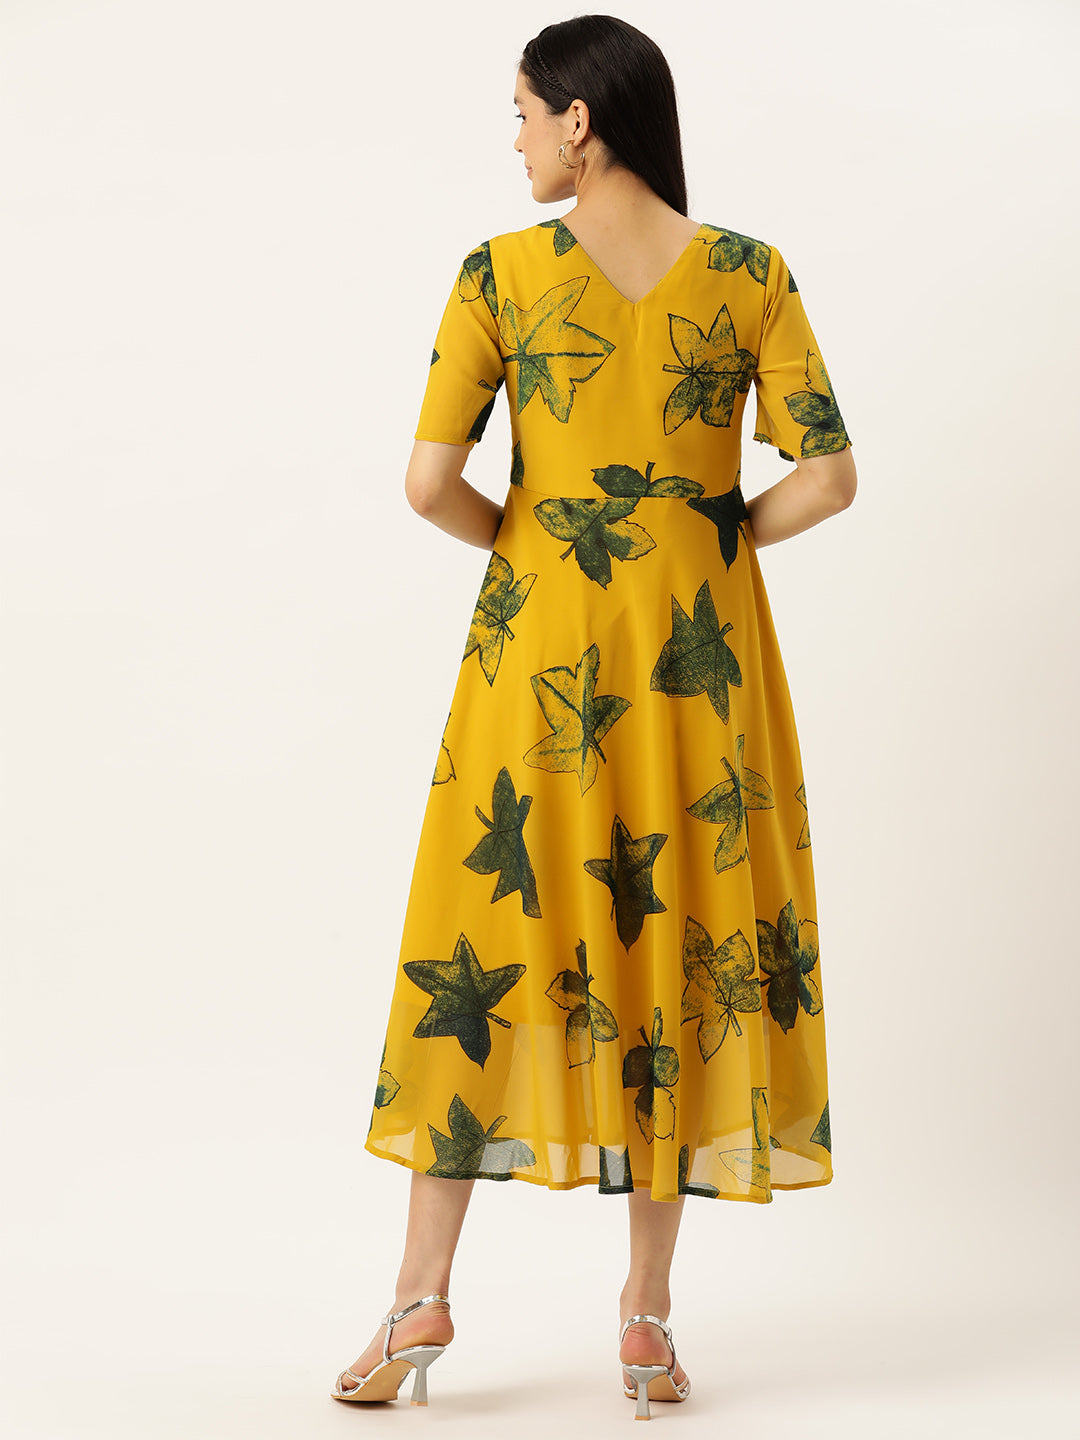 Women's V-Neck Ethnic Dress Yellow Dress - VAABA USA